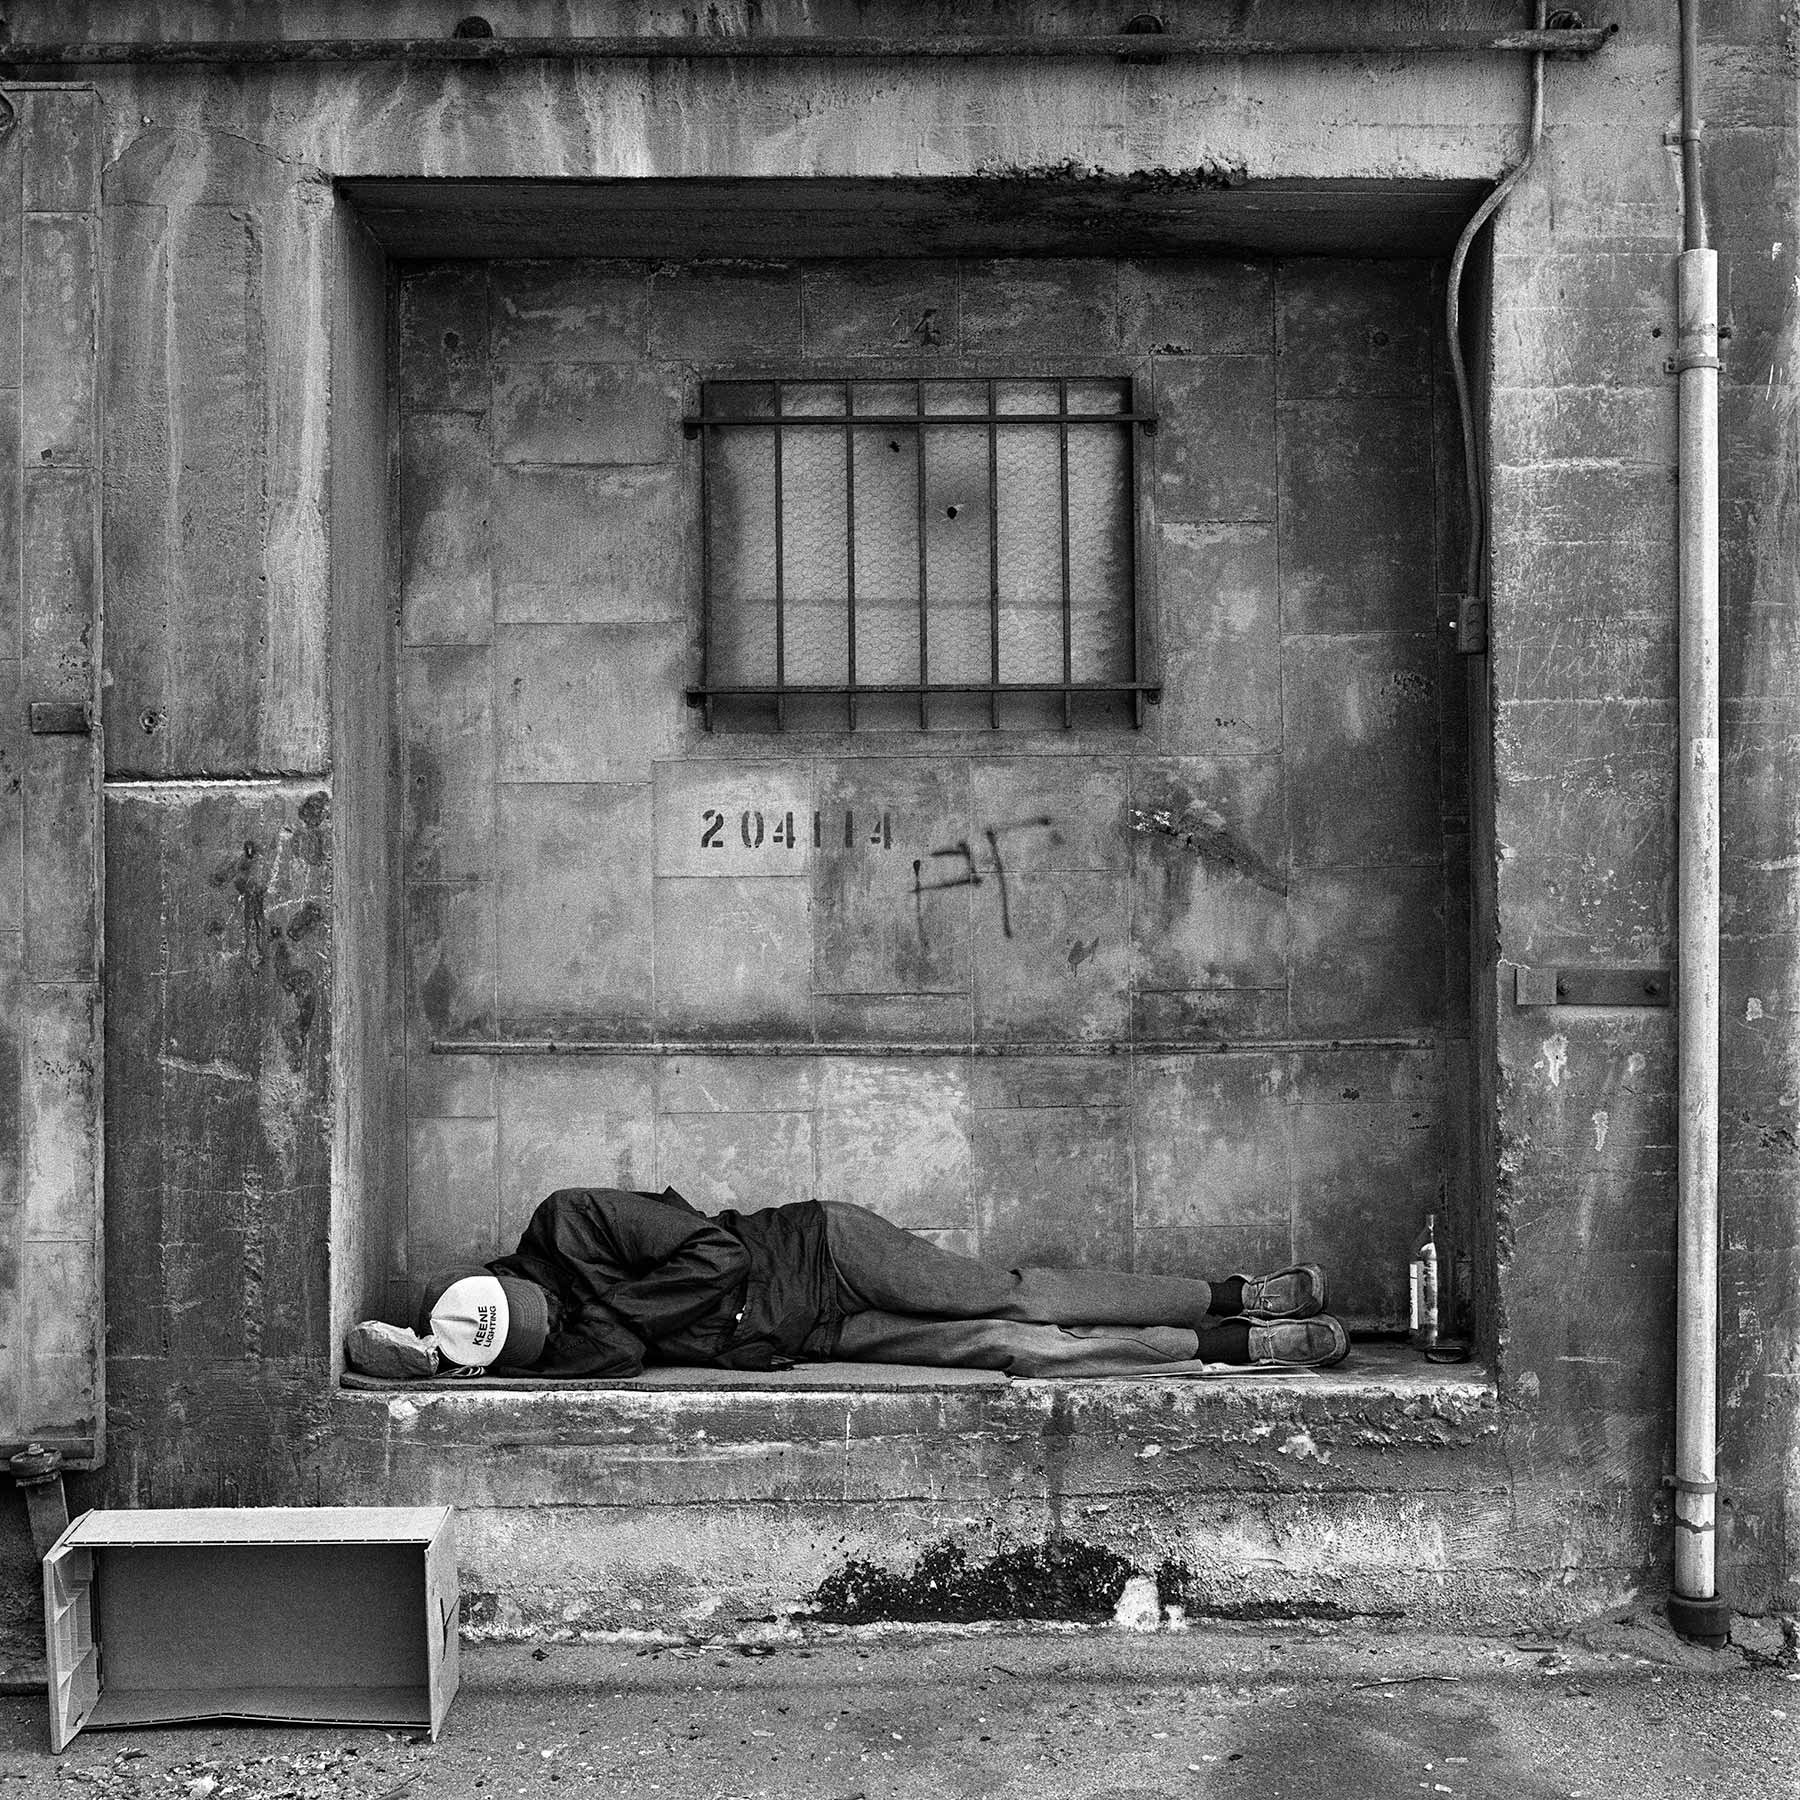 Homeless sleeping – Arts District, Los Angeles, California, 1983